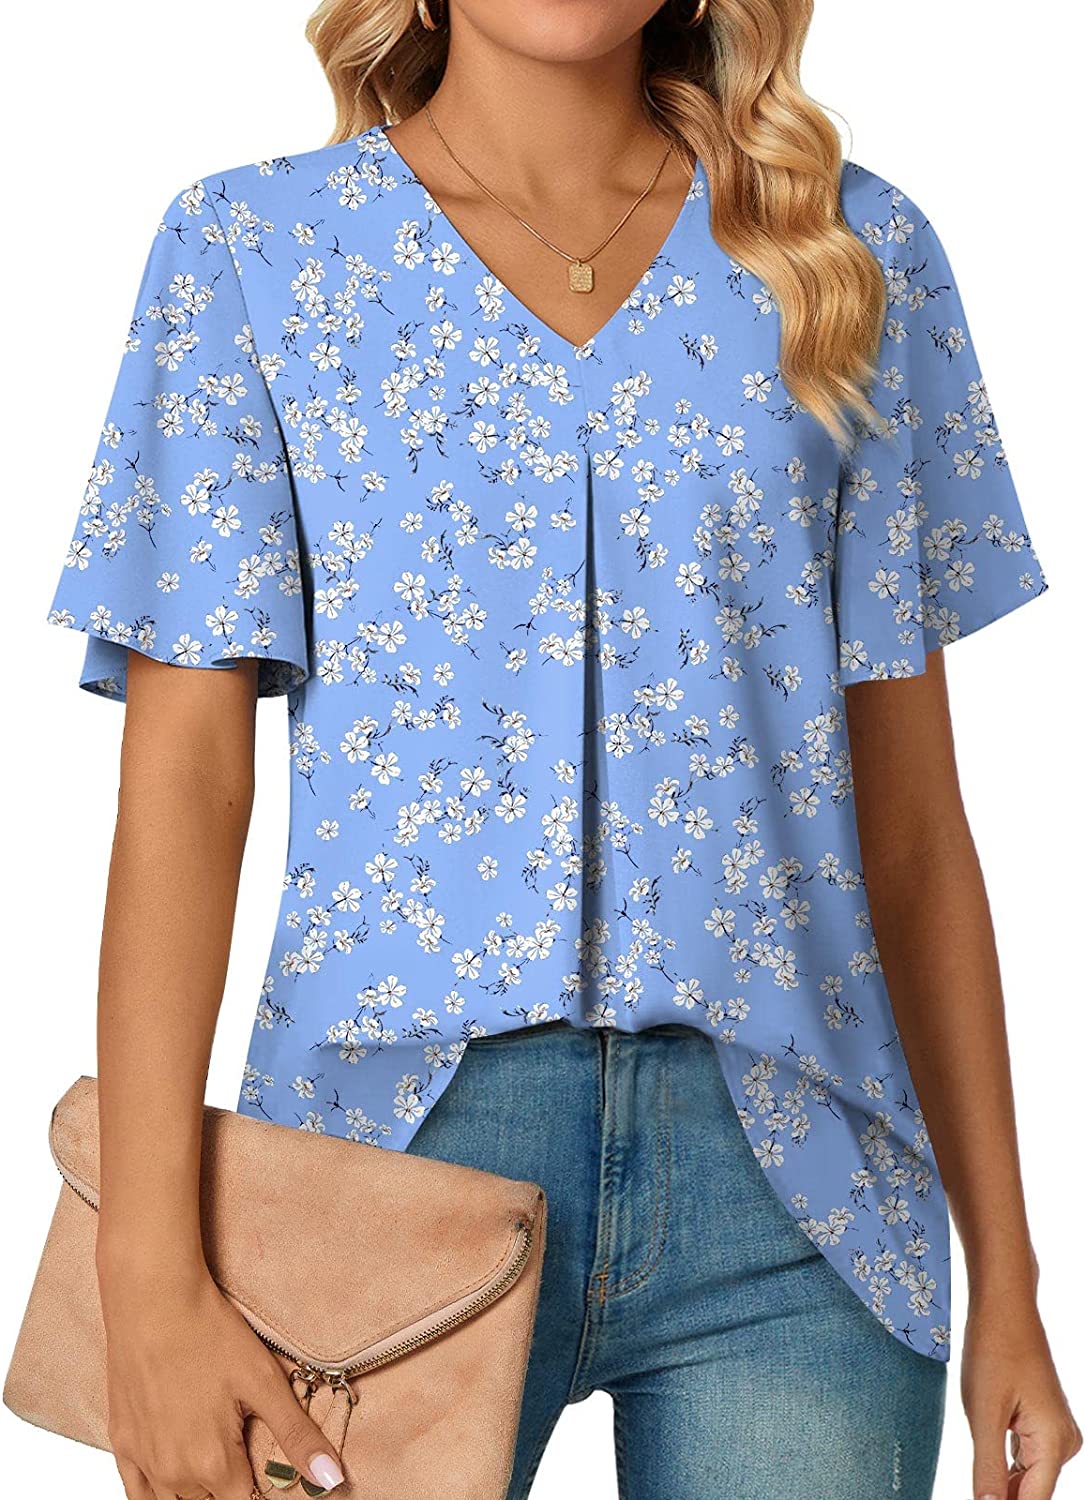 Entyinea Womens Summer Tops Ruffle Short Sleeve Blouses V Neck Solid Color  Tops Shirts Blue XXL